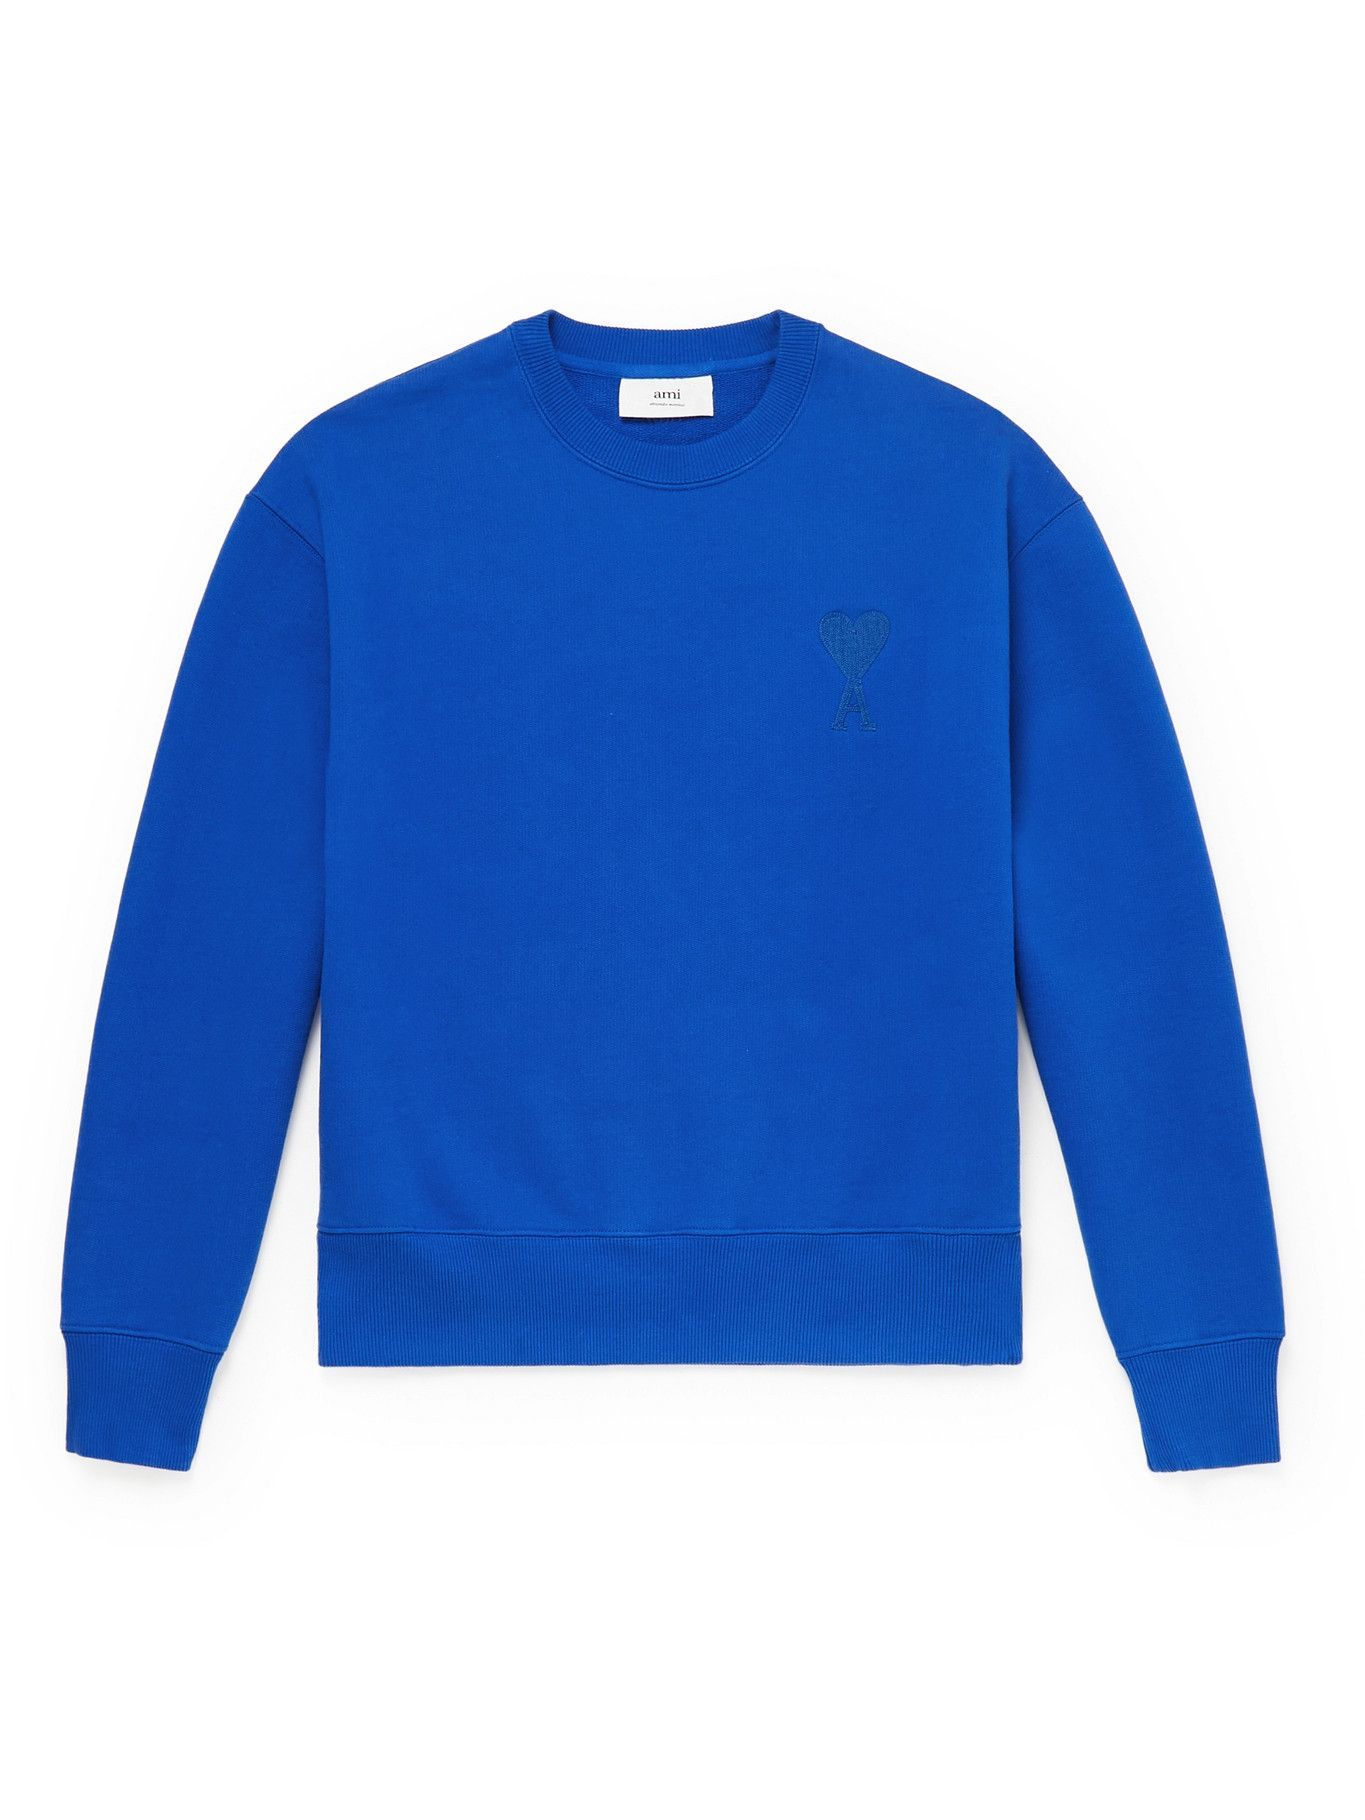 AMI PARIS - Logo-Appliquéd Cotton-Jersey Sweatshirt - Blue